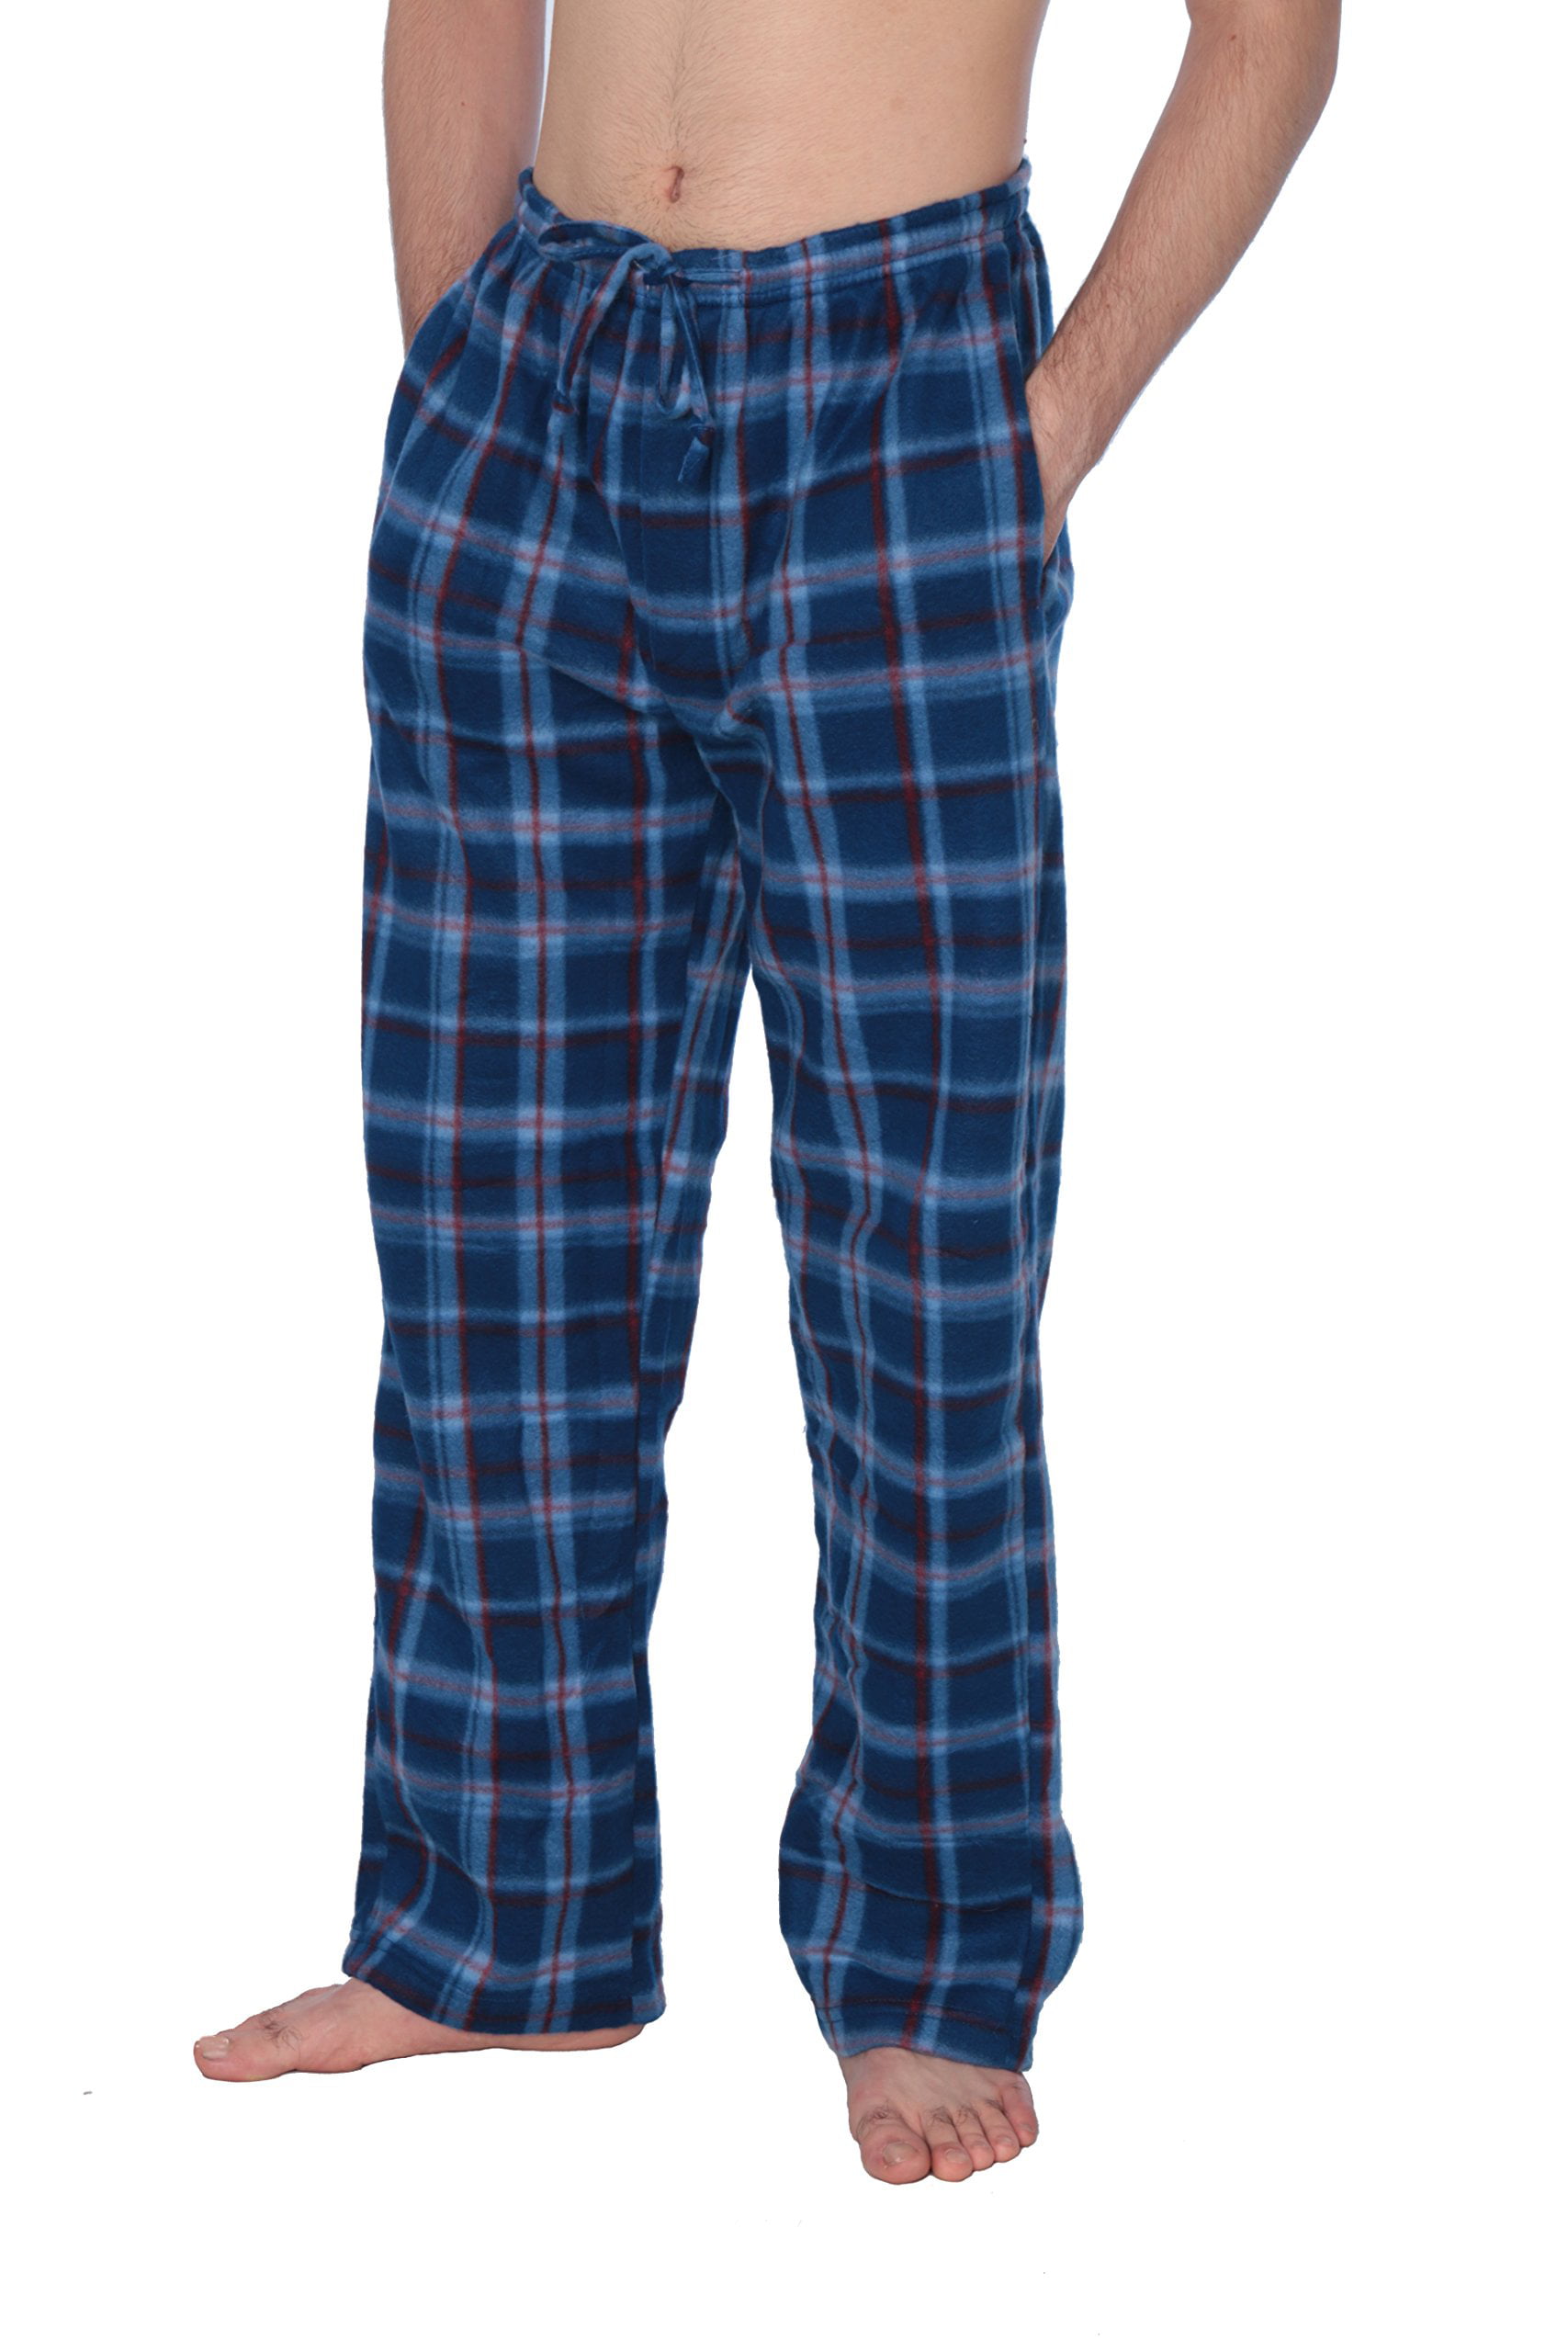 20 Colors Active Club Men's PJ Pajama Fleece Lounge Plaid Bottoms Pants Microfleece 